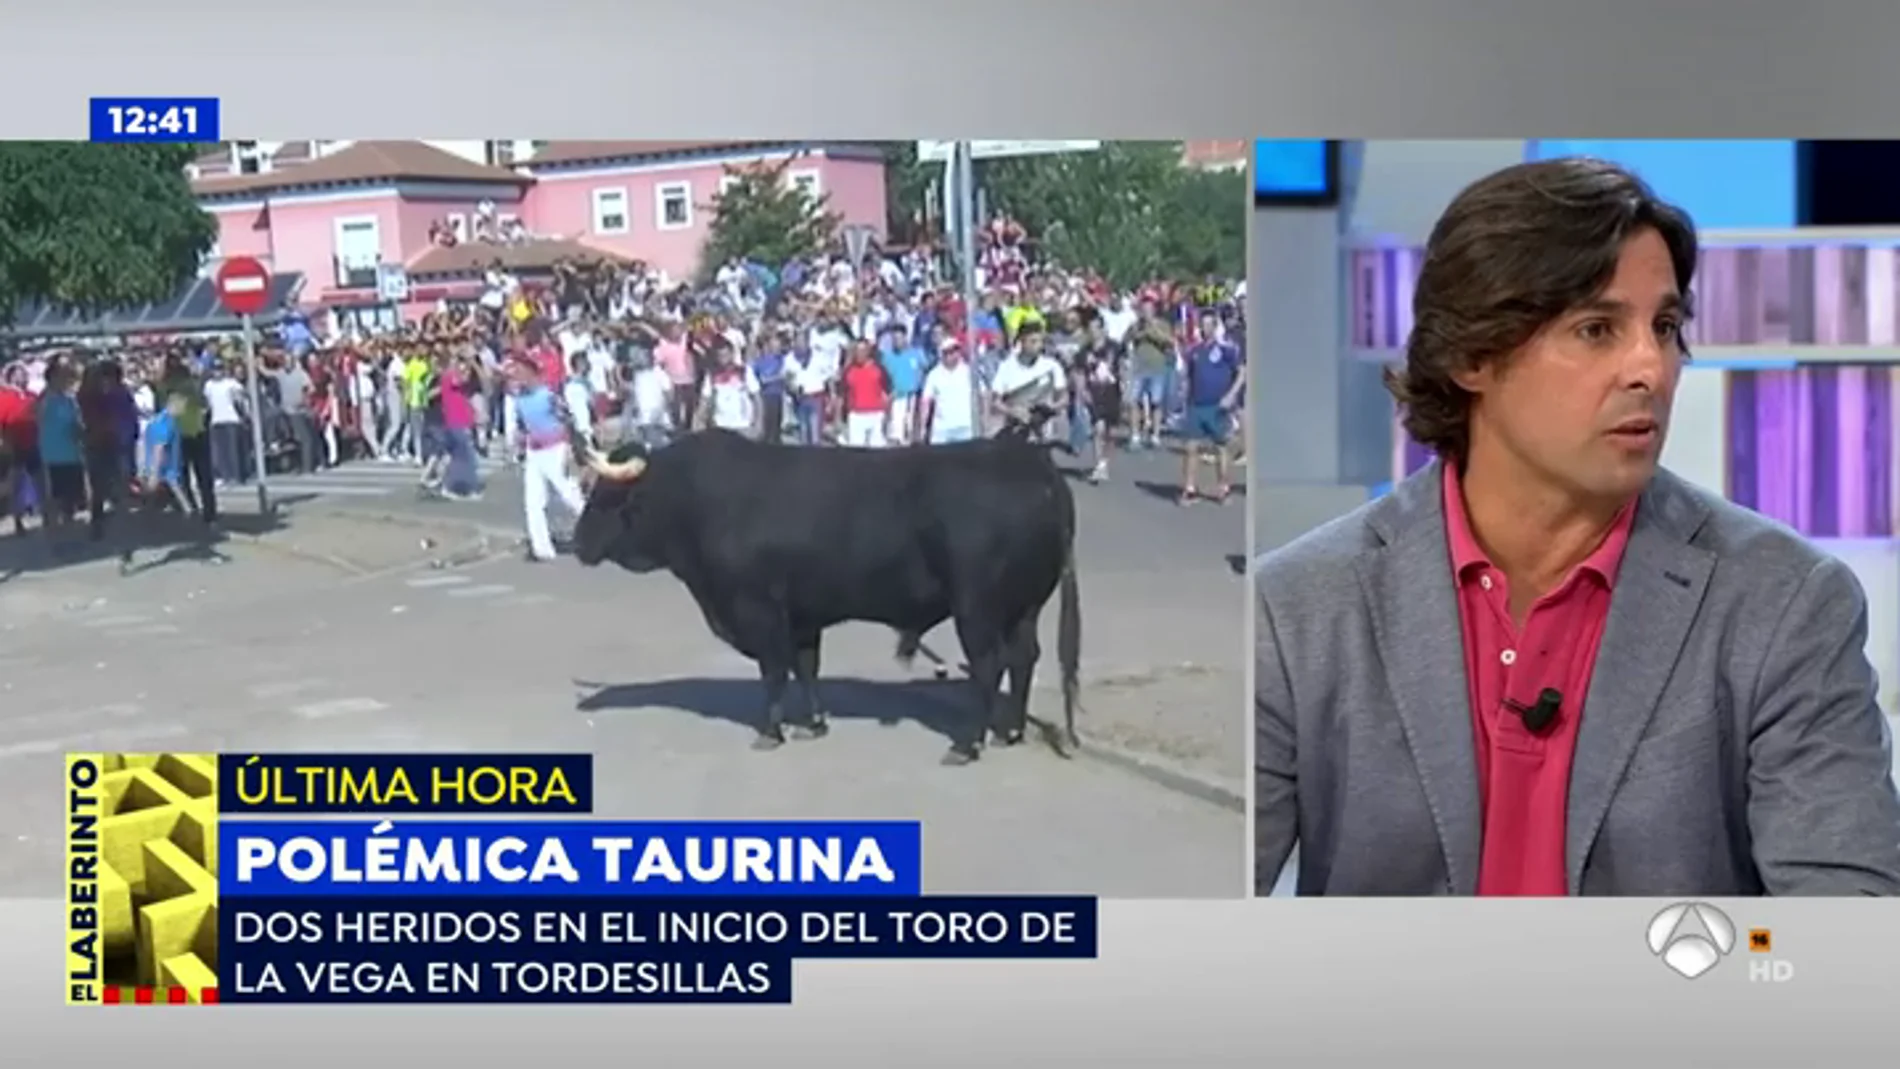 Fran Rivera: "No me gusta la fiesta del toro de la Vega, el toro nace para ser toreado en una plaza"